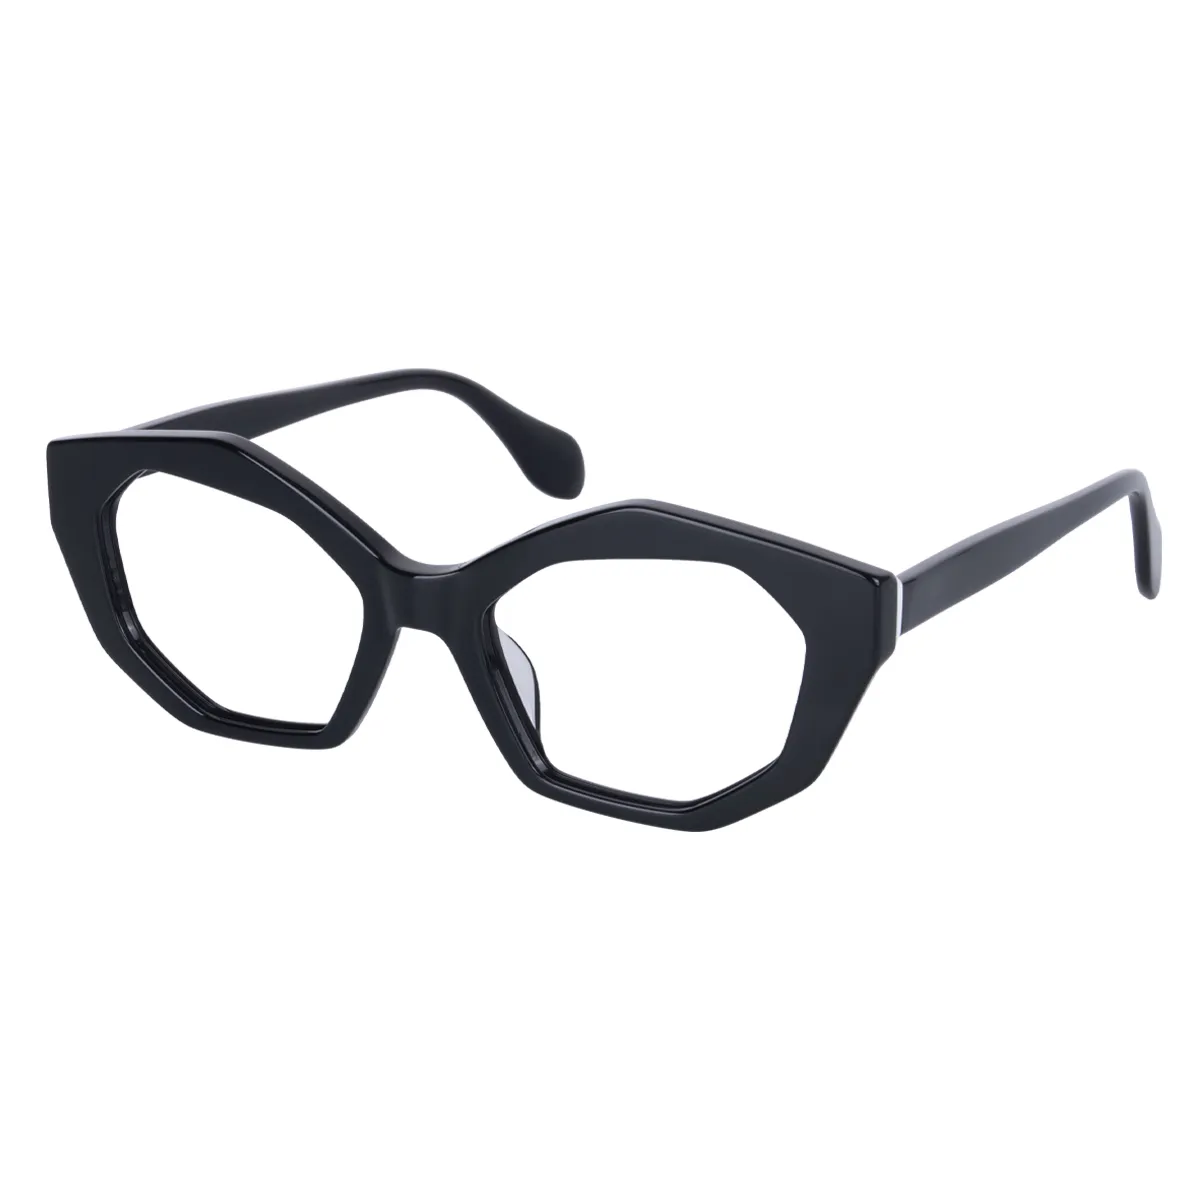 Betina - Geometric Black Glasses for Women